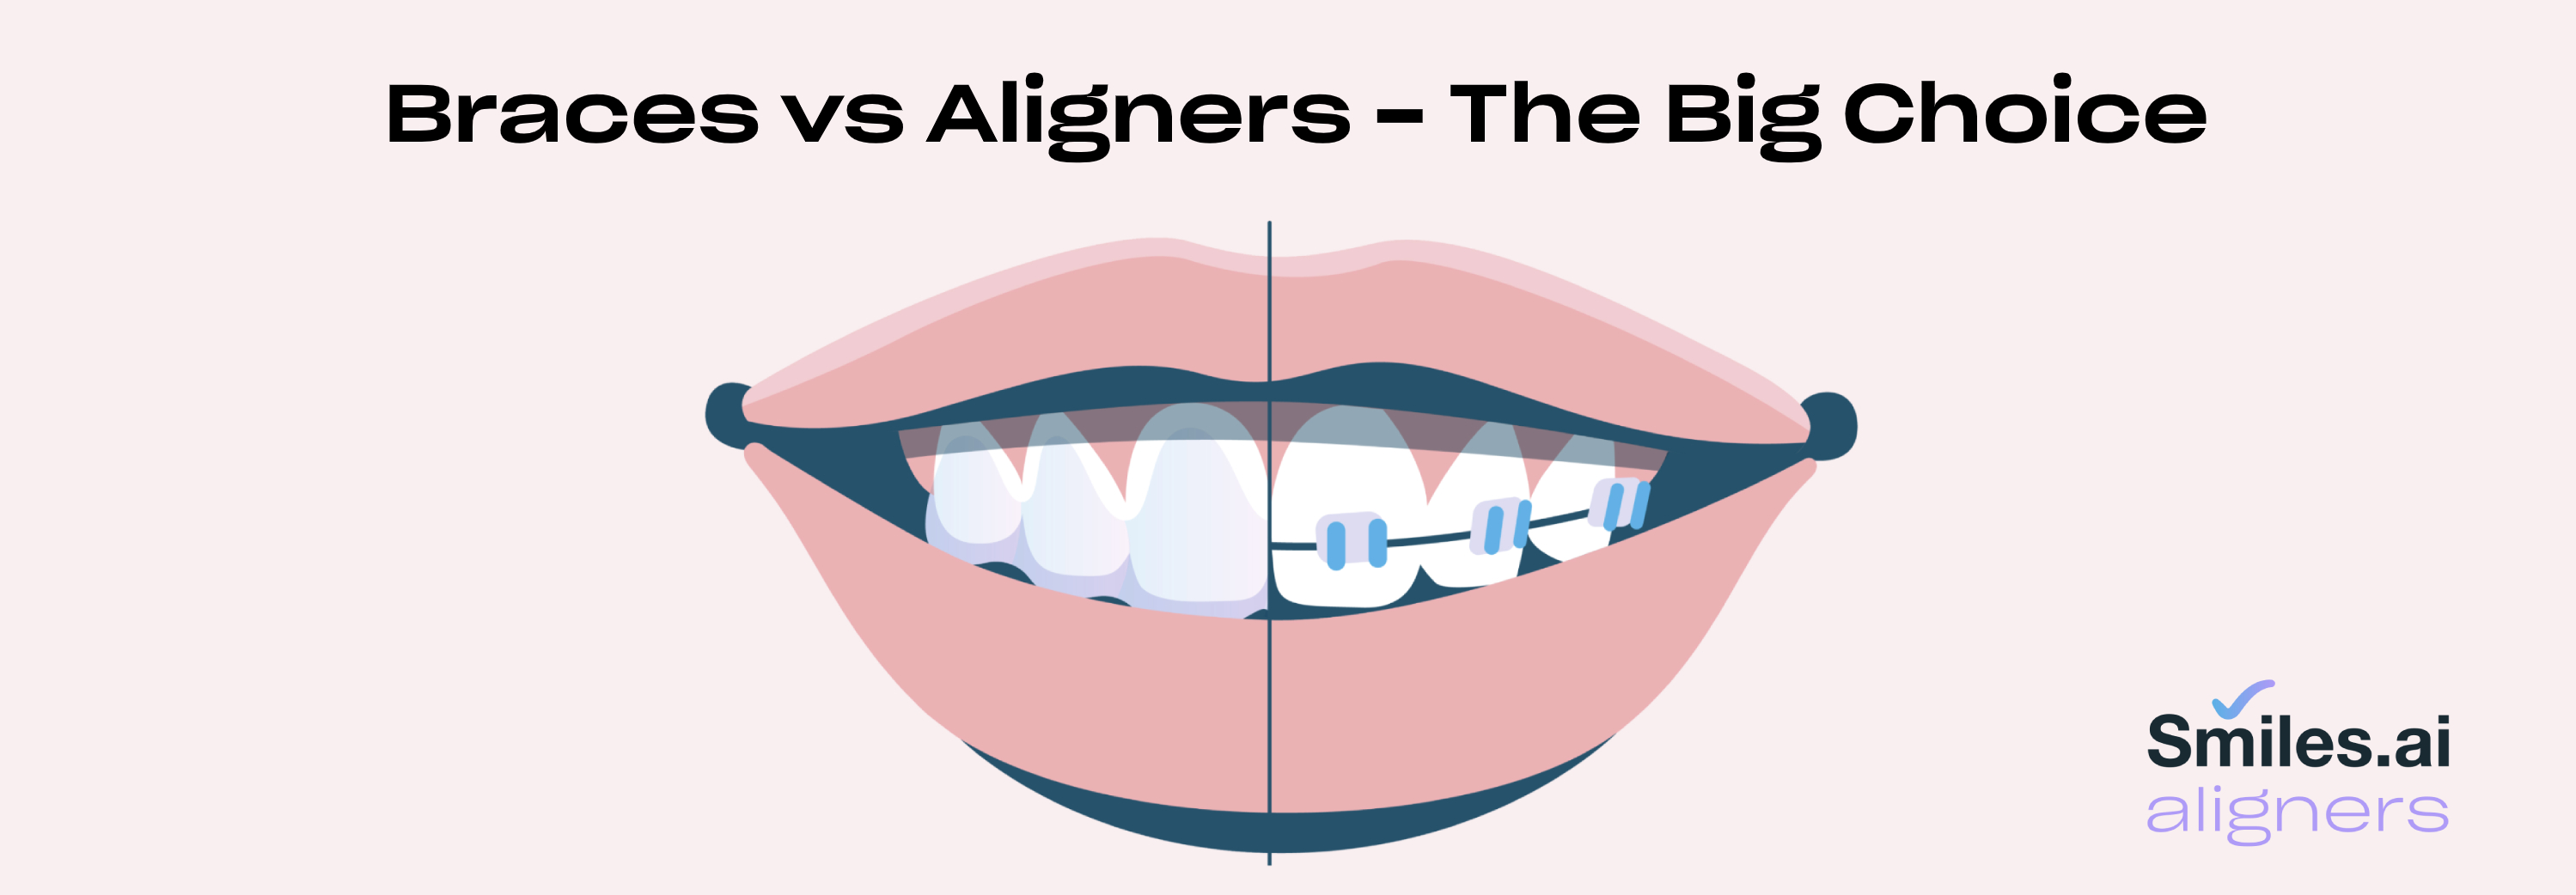 braces vs aligners - smiles.ai